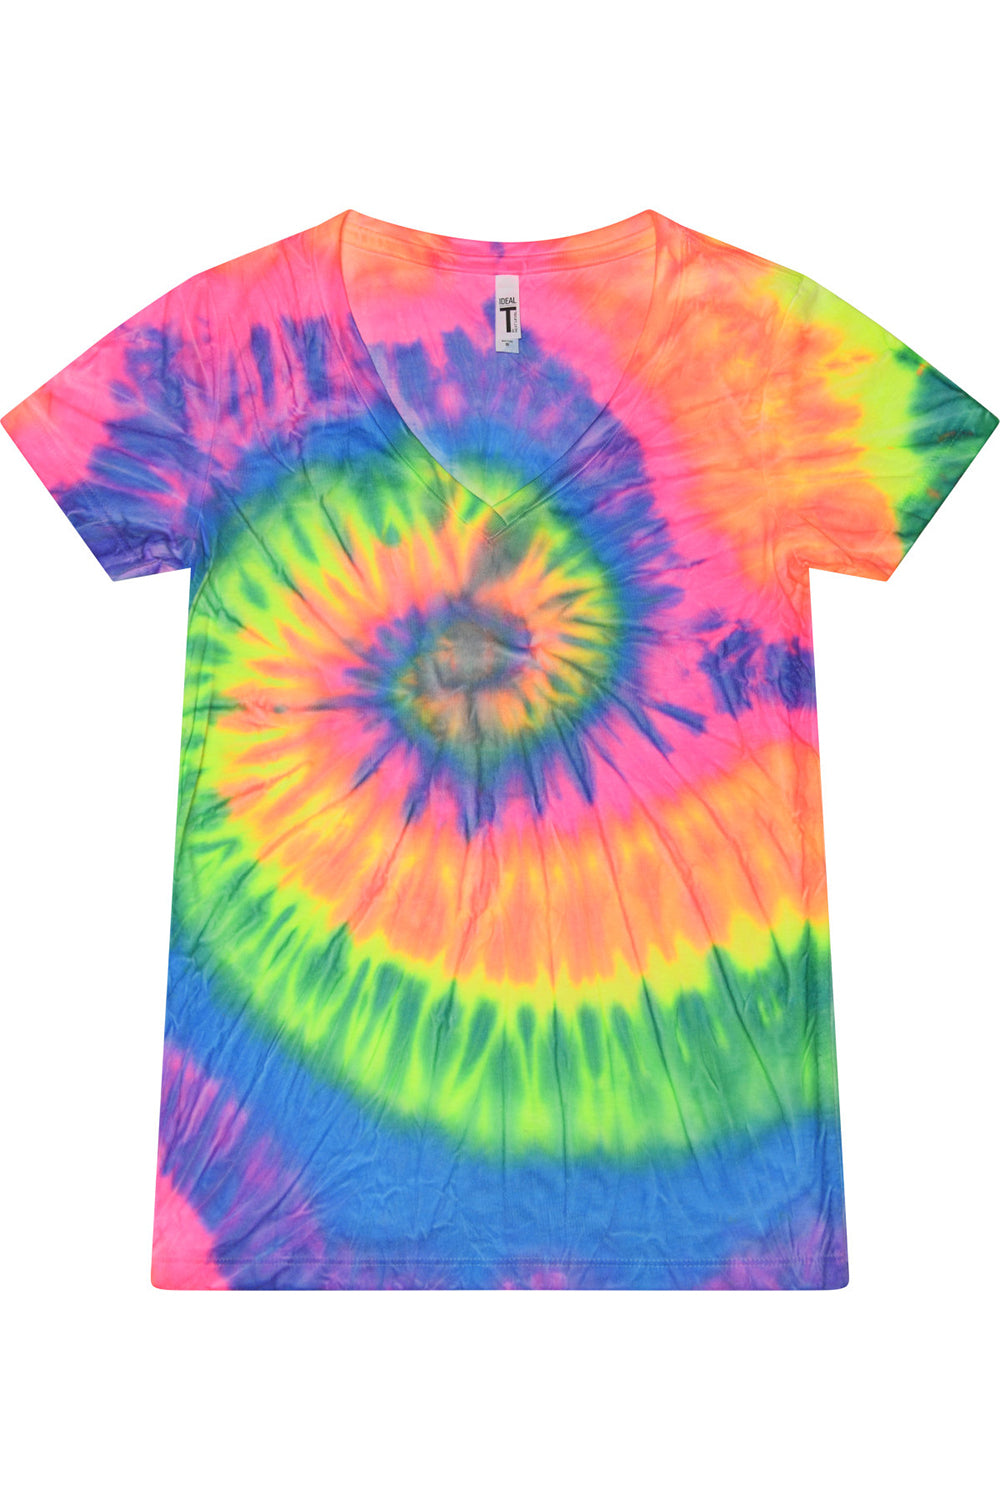 Tie-Dye 1075CD Womens Short Sleeve V-Neck T-Shirt Neon Rainbow Flat Front